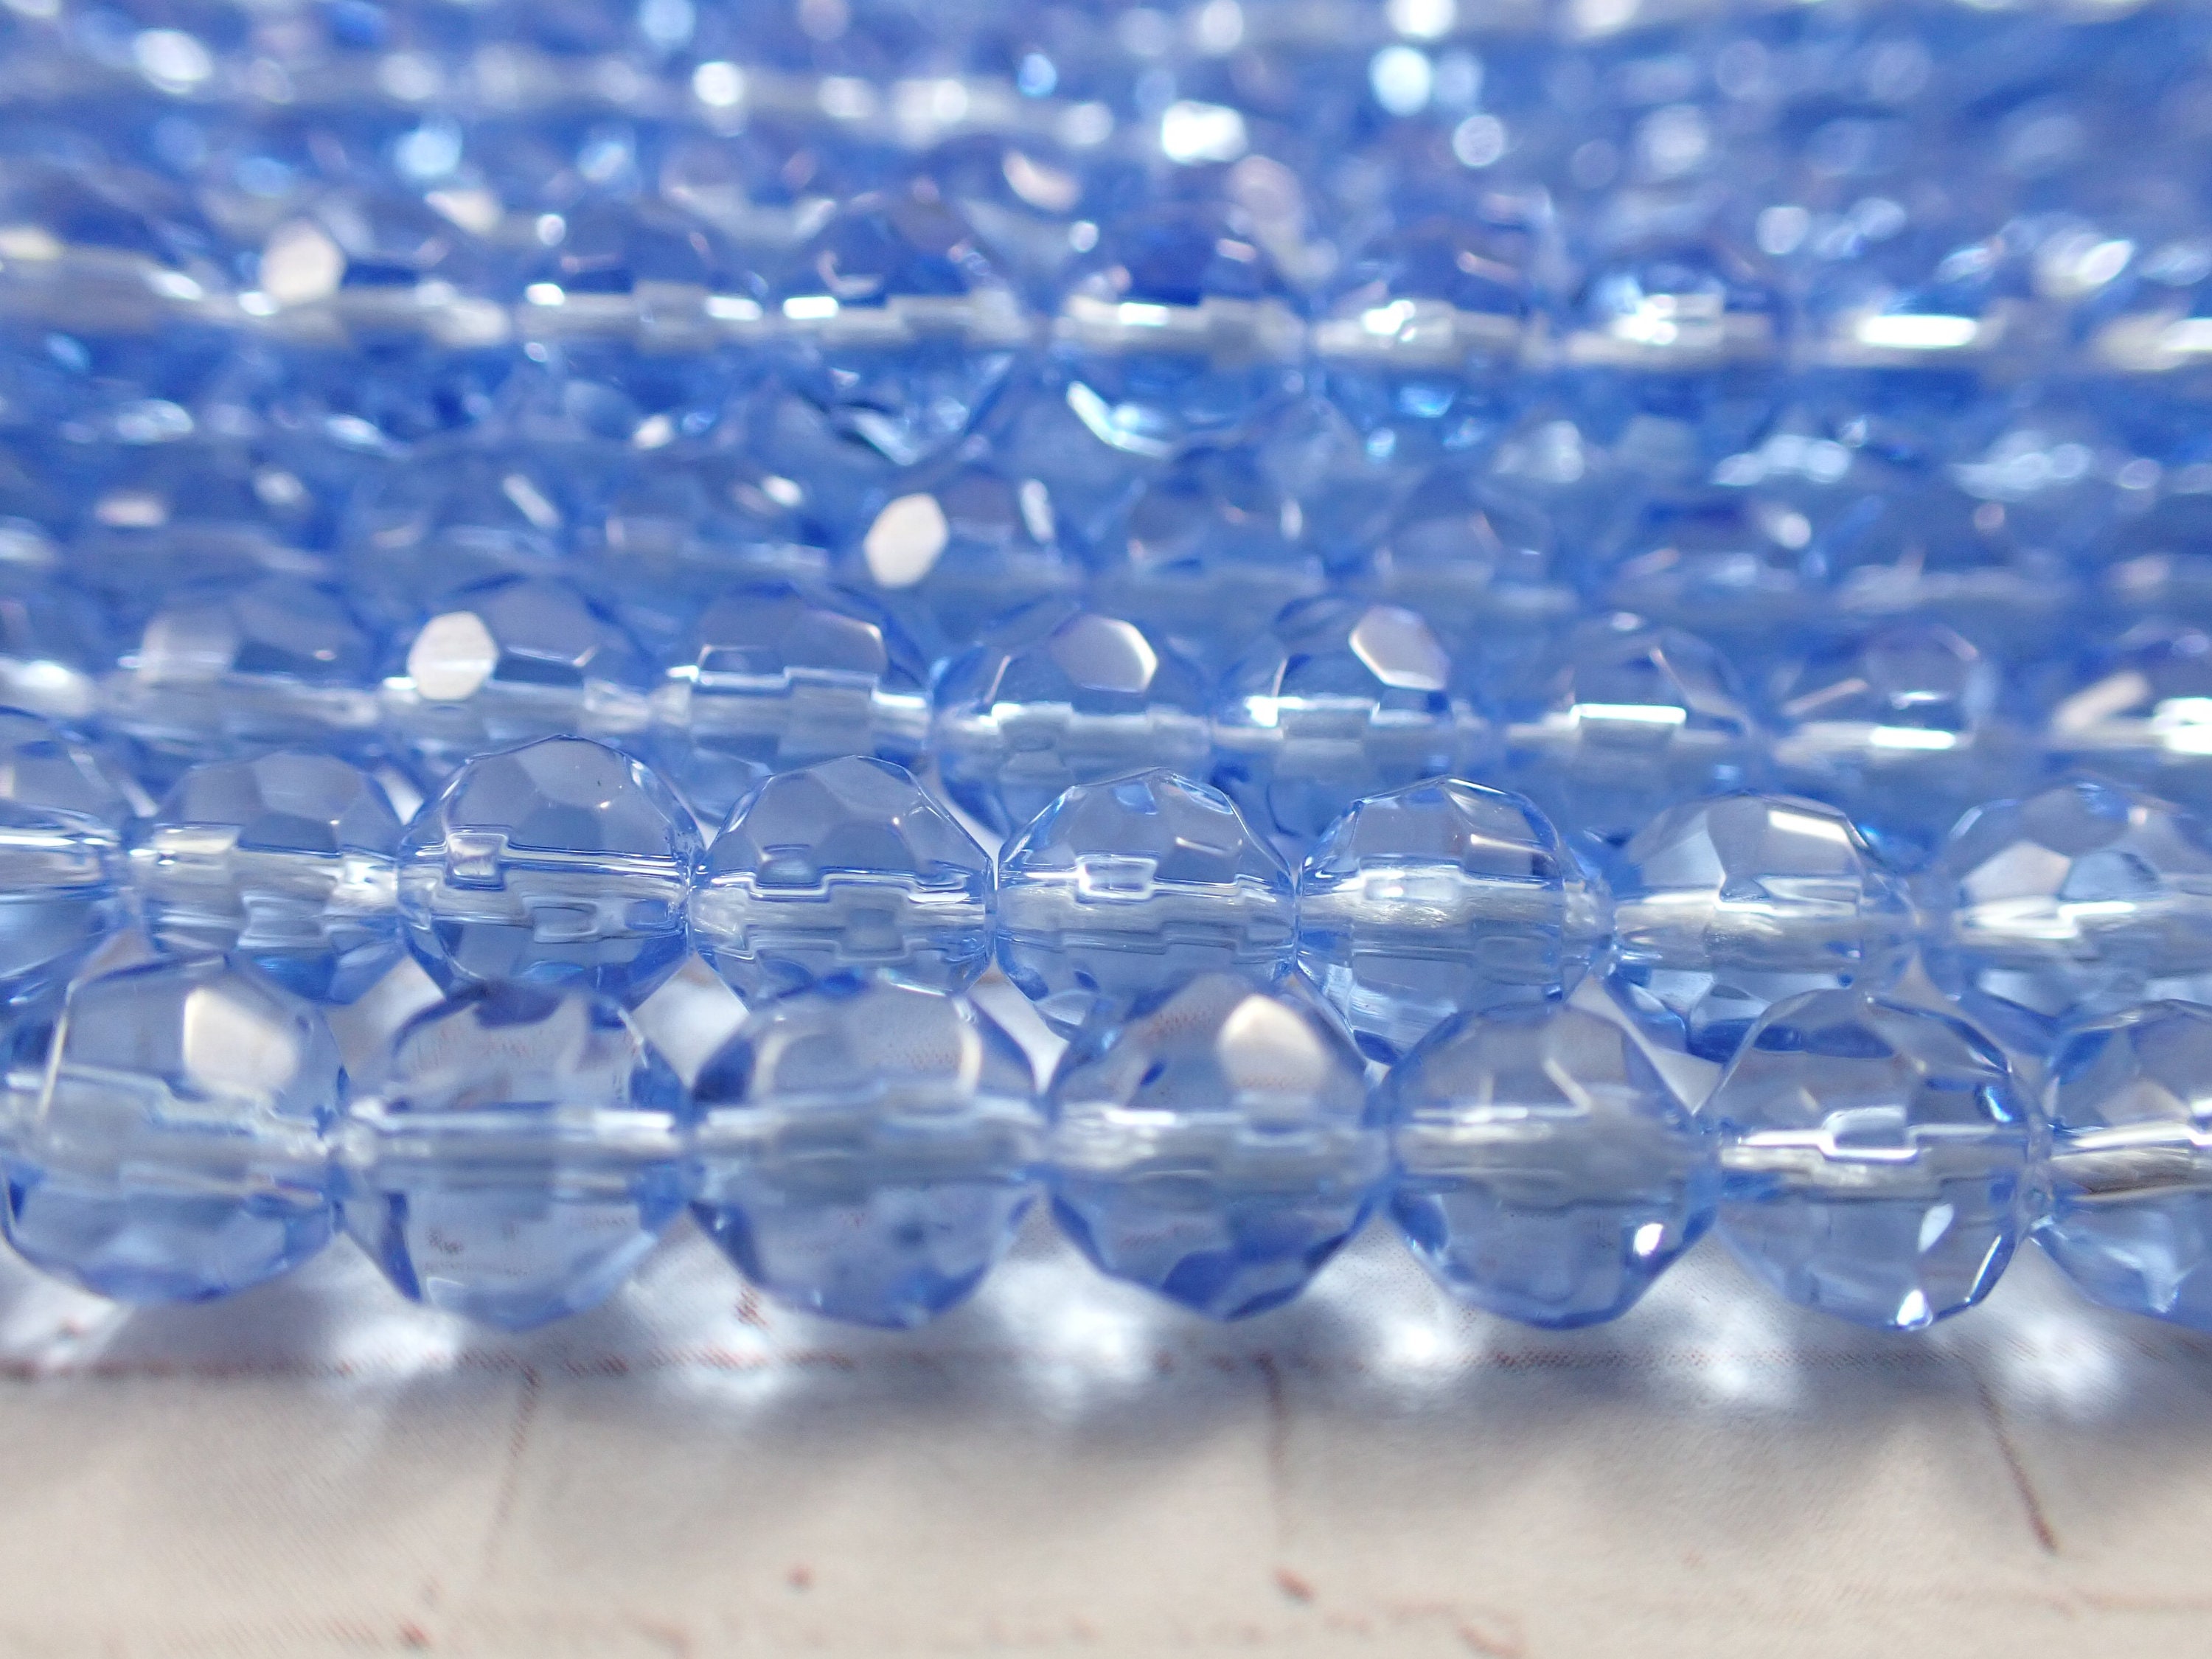 AB Transparent Baby Blue Acrylic Beads Iridescent Beads - Round Clear  Gumball Bubblegum Glitter Beads - 6mm 8mm 10mm